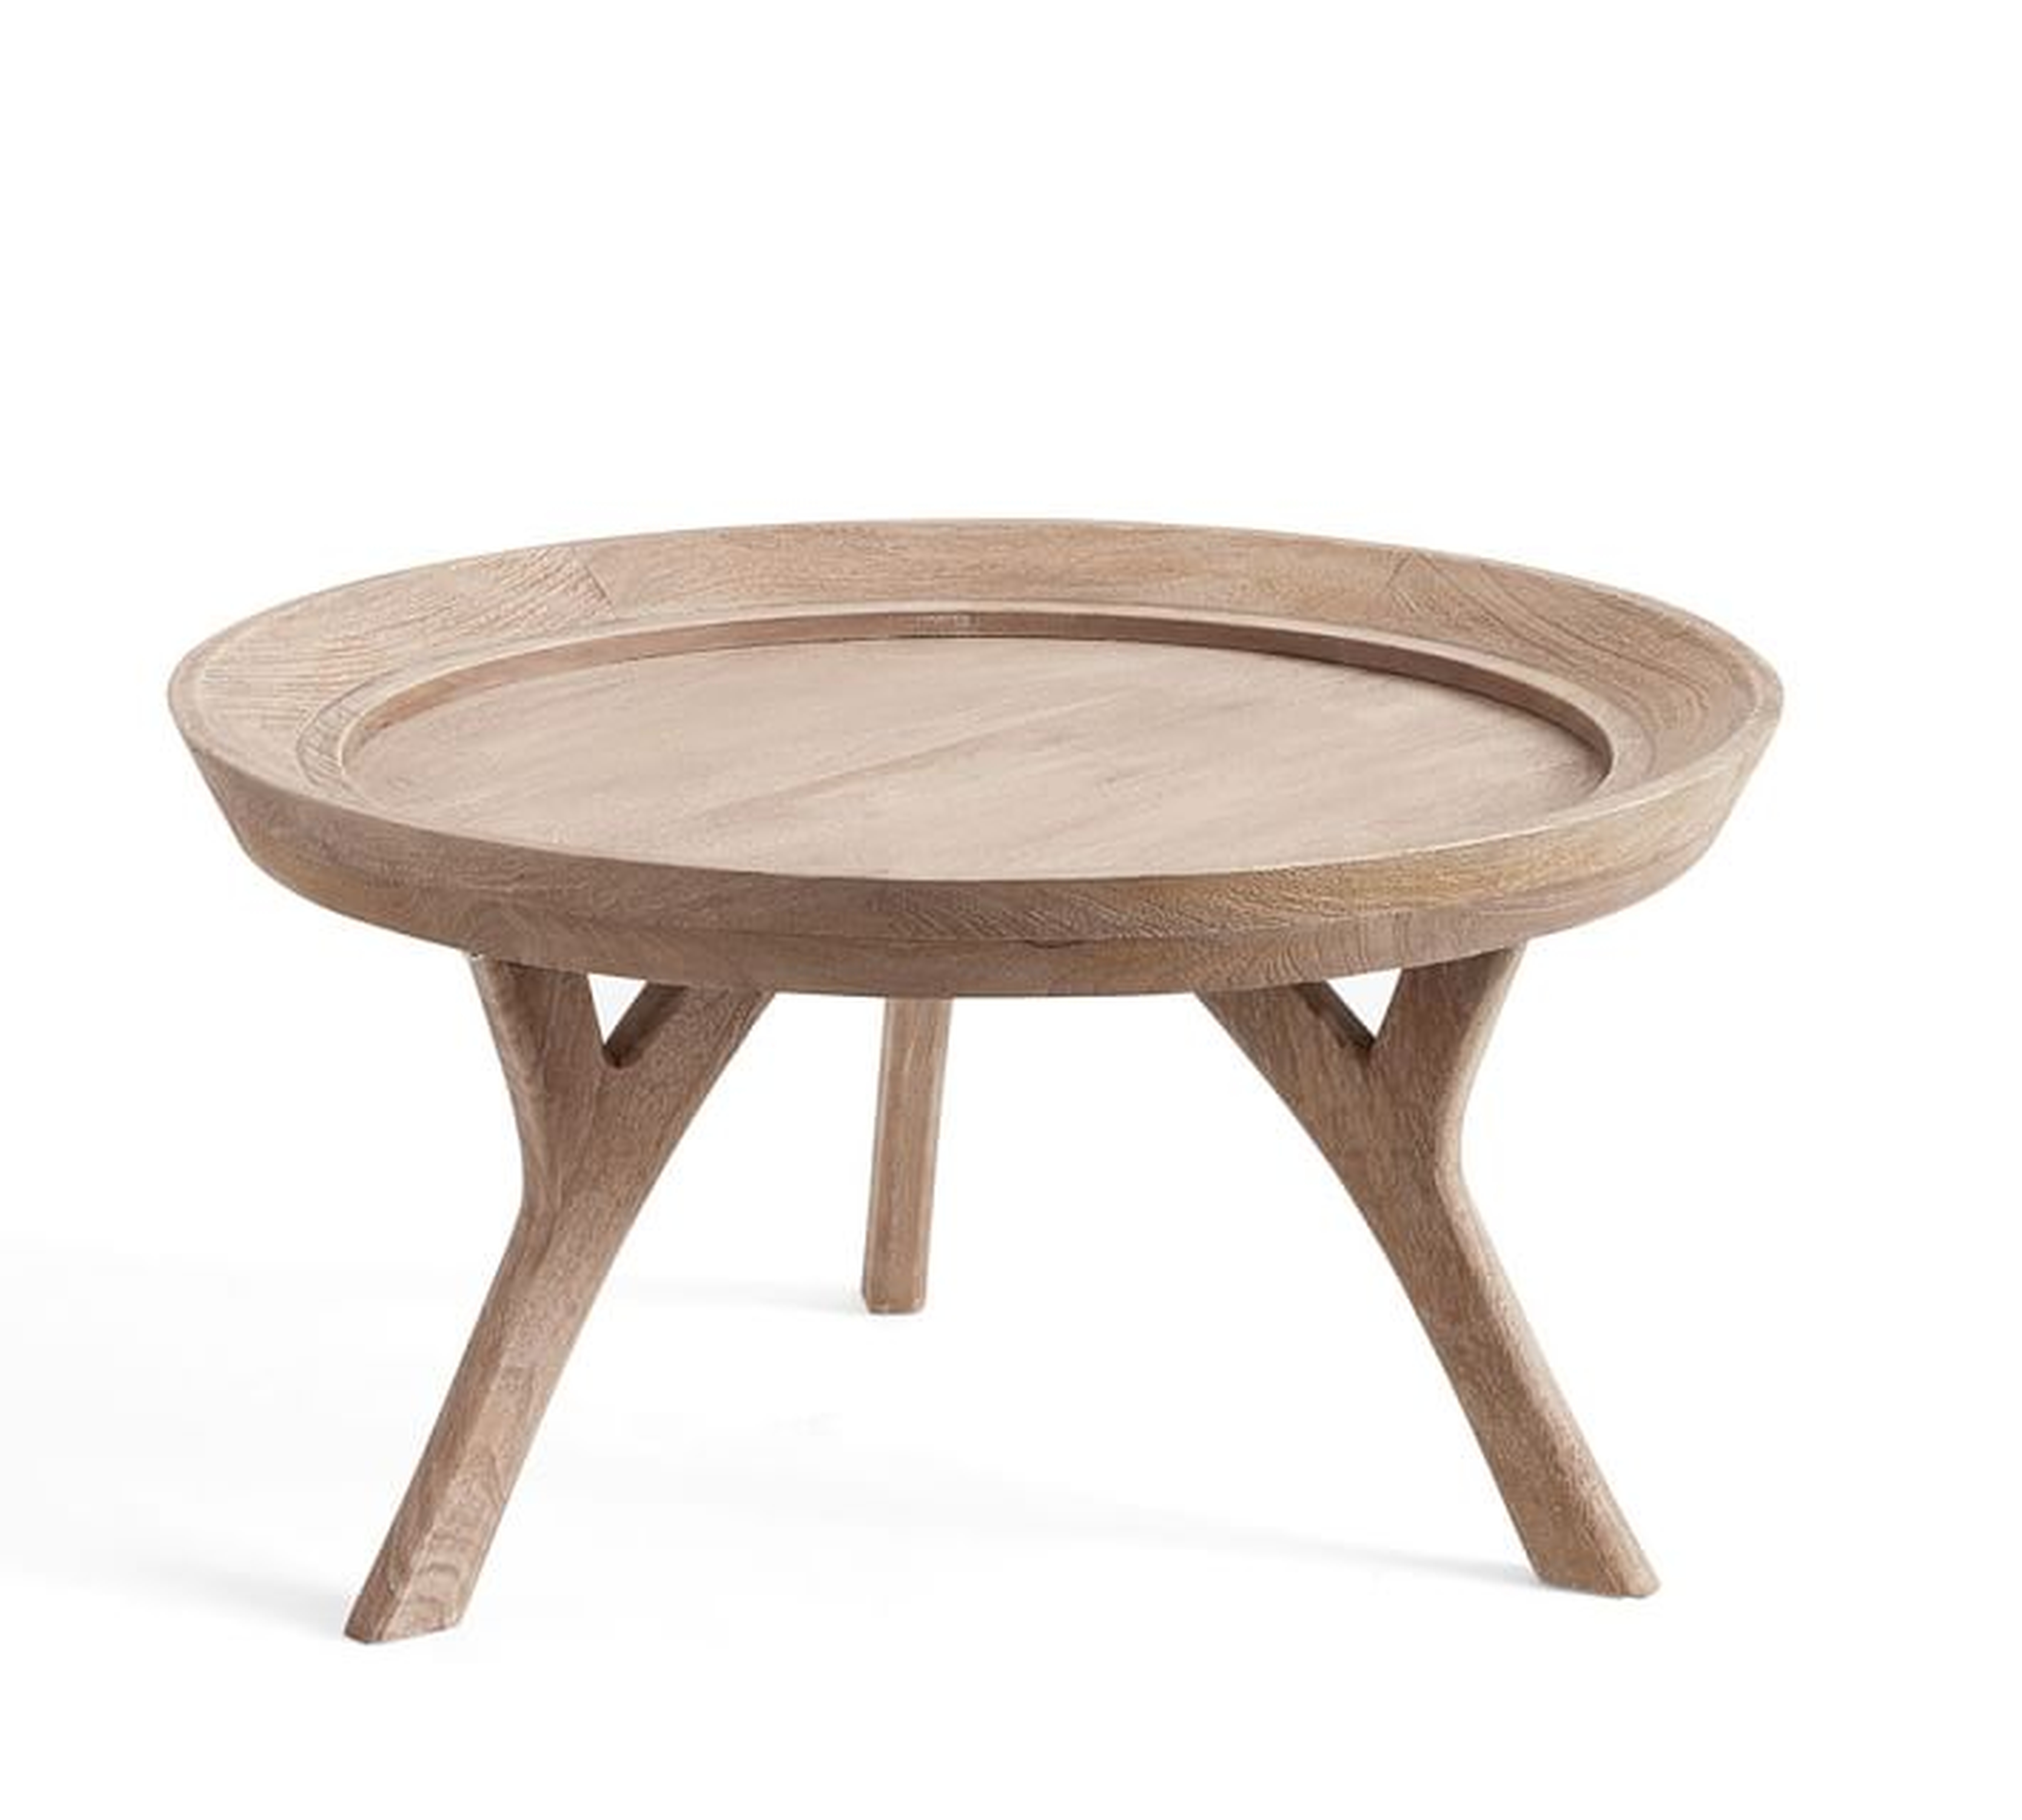 Moraga Round Wood Coffee Table - Pottery Barn